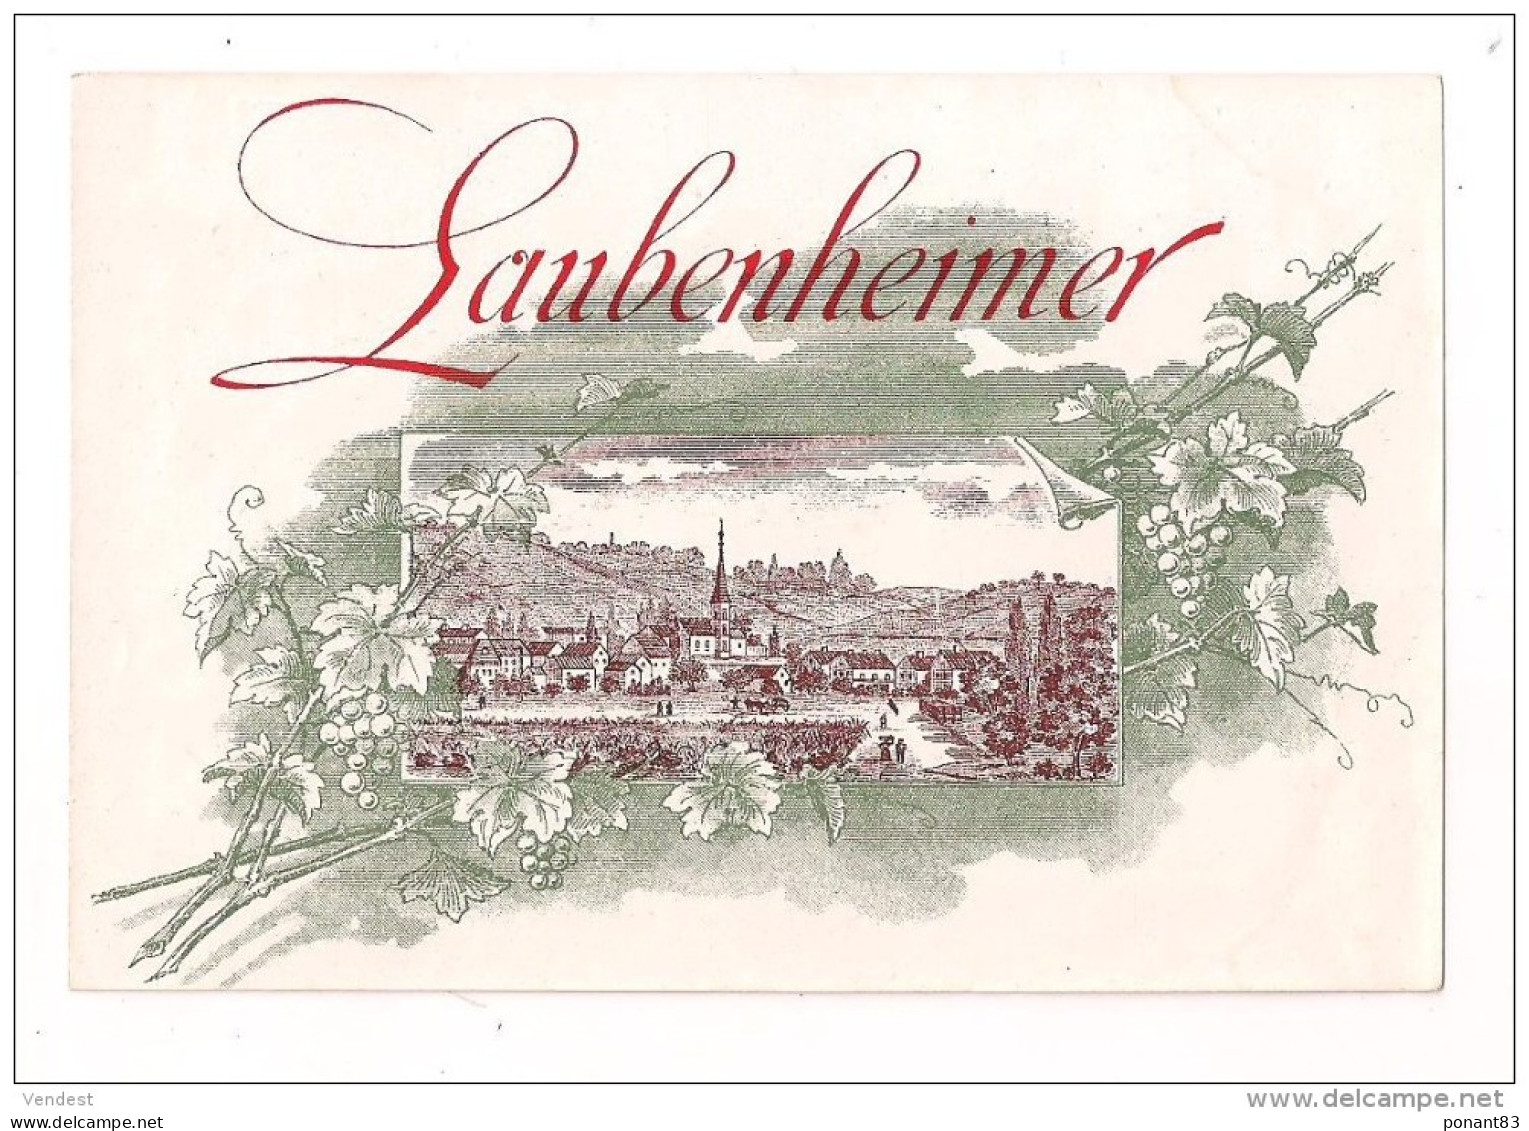 Etiquette Vin D'Allemagne  Laubenheimer - - - Weisswein